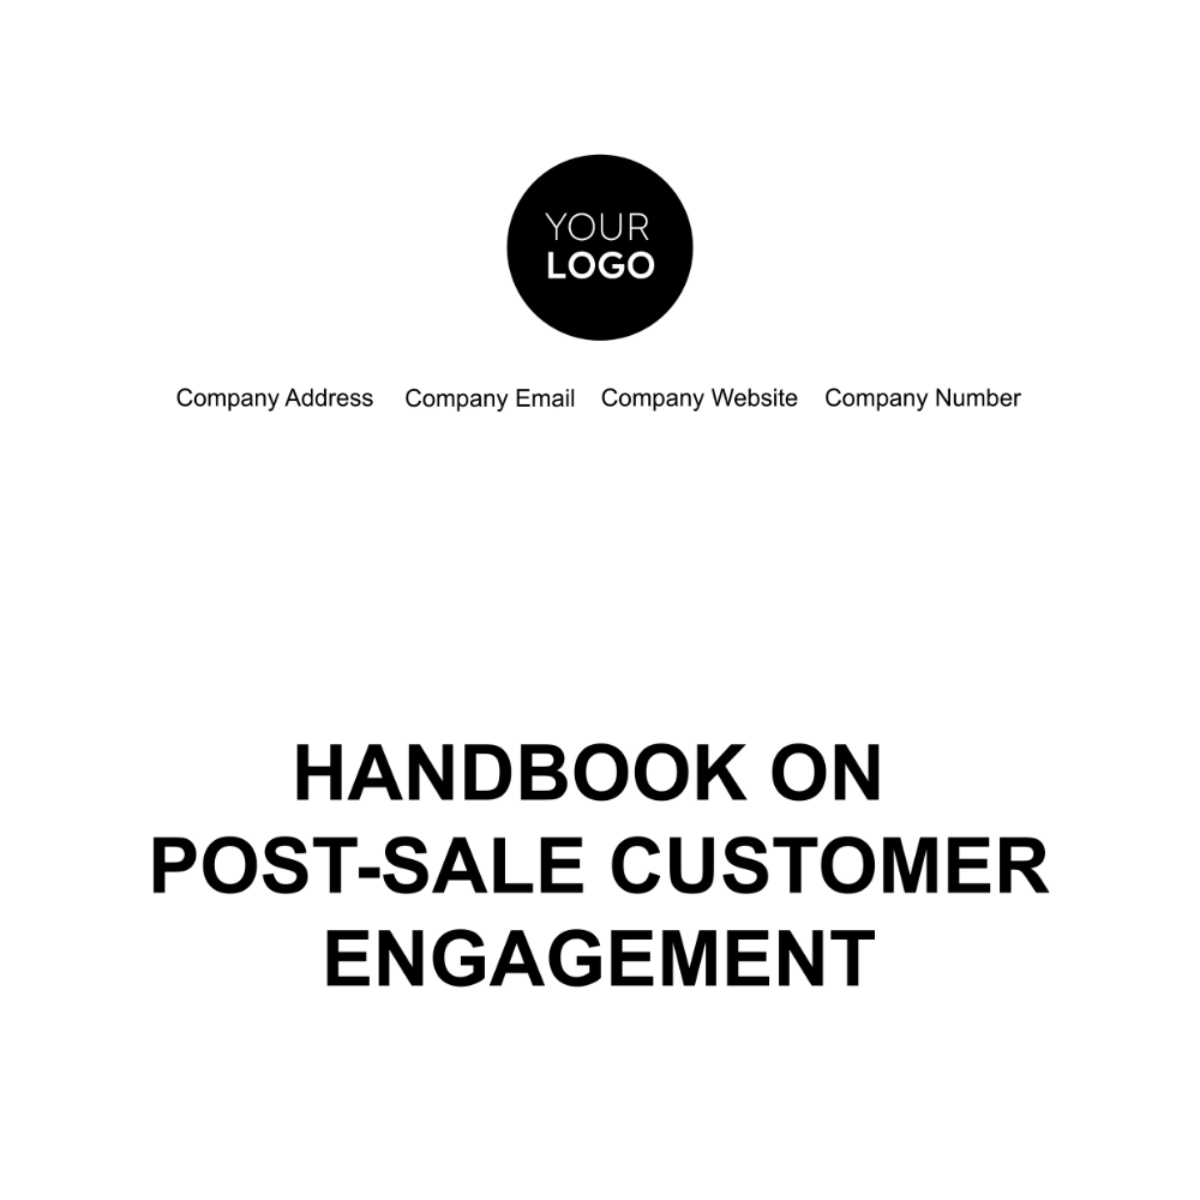 Handbook on Post-Sale Customer Engagement Template